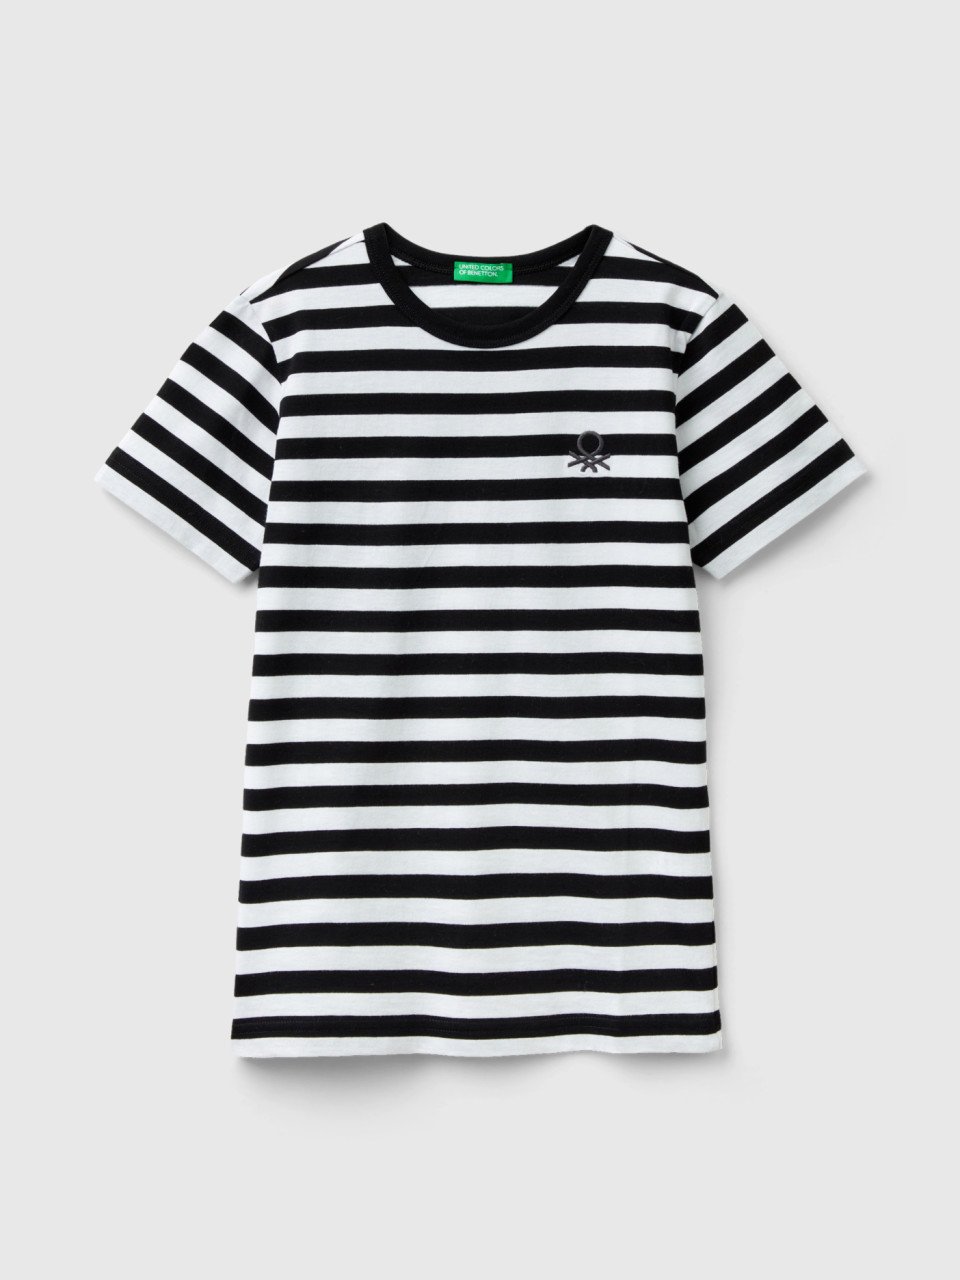 Benetton, Striped 100% Cotton T-shirt, Black, Kids